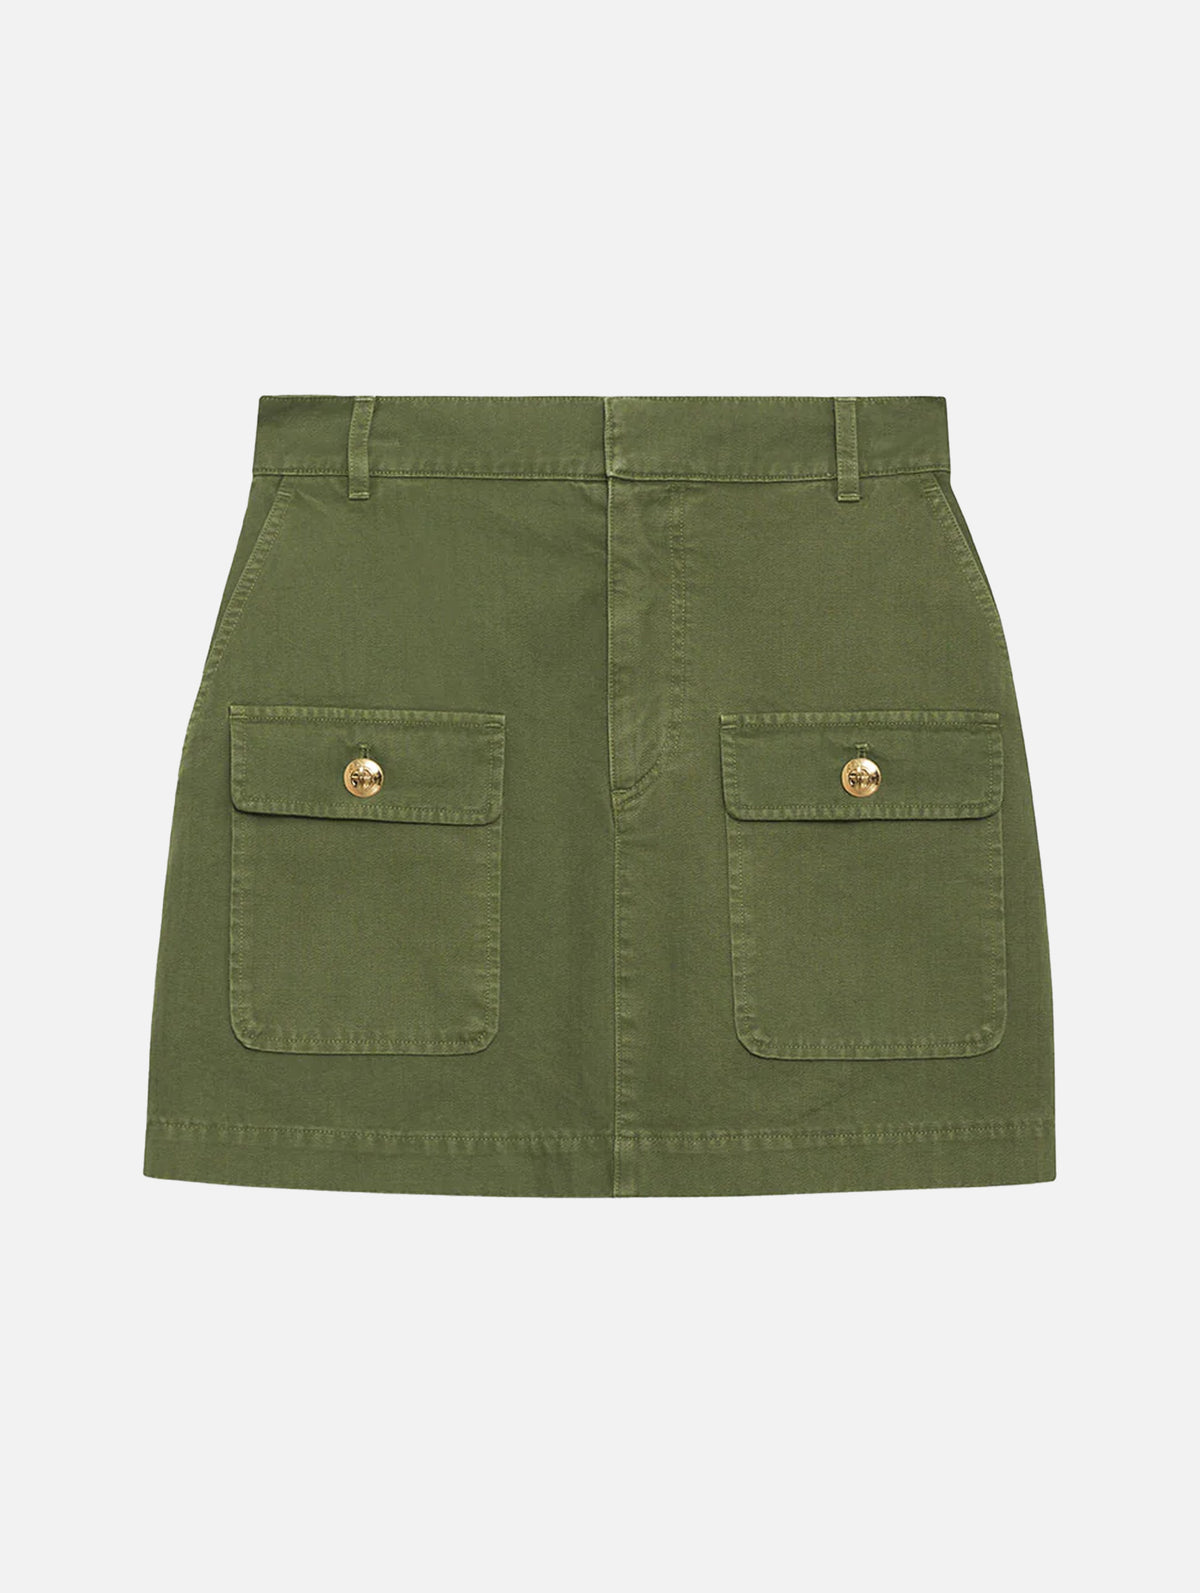 Aliza Skirt in Army Green